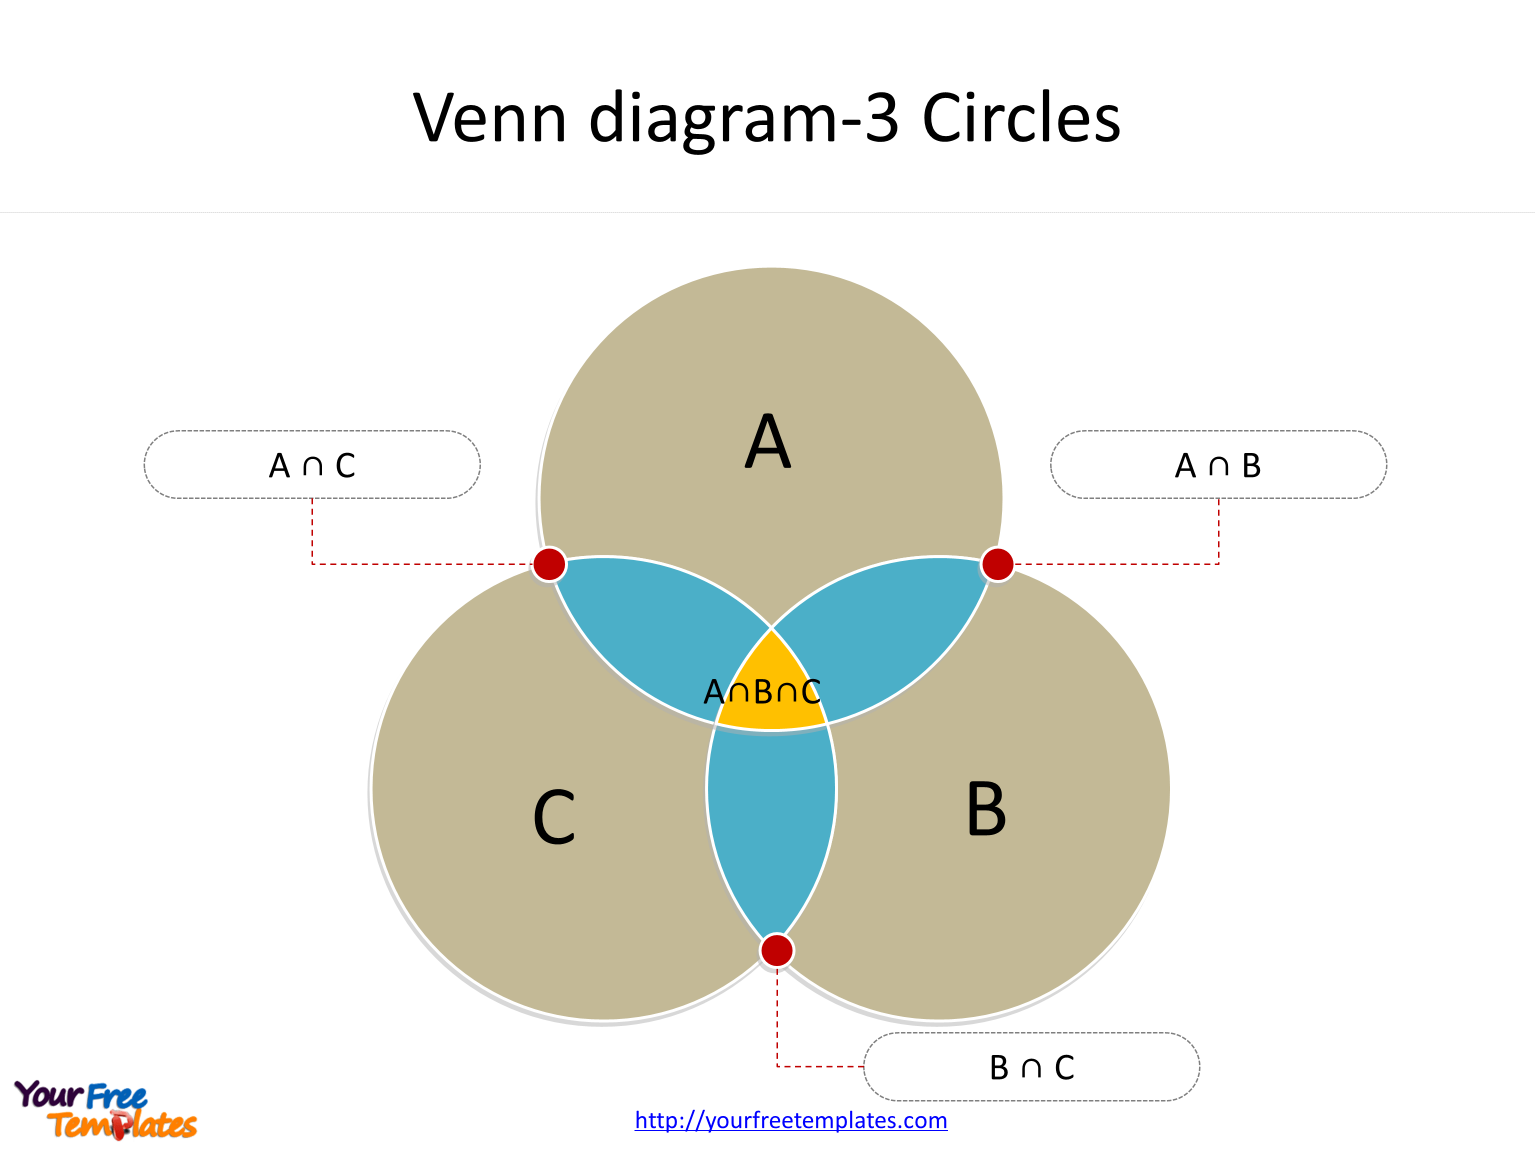 get-venn-diagram-template-in-powerpoint-pics-anatomy-of-diagram